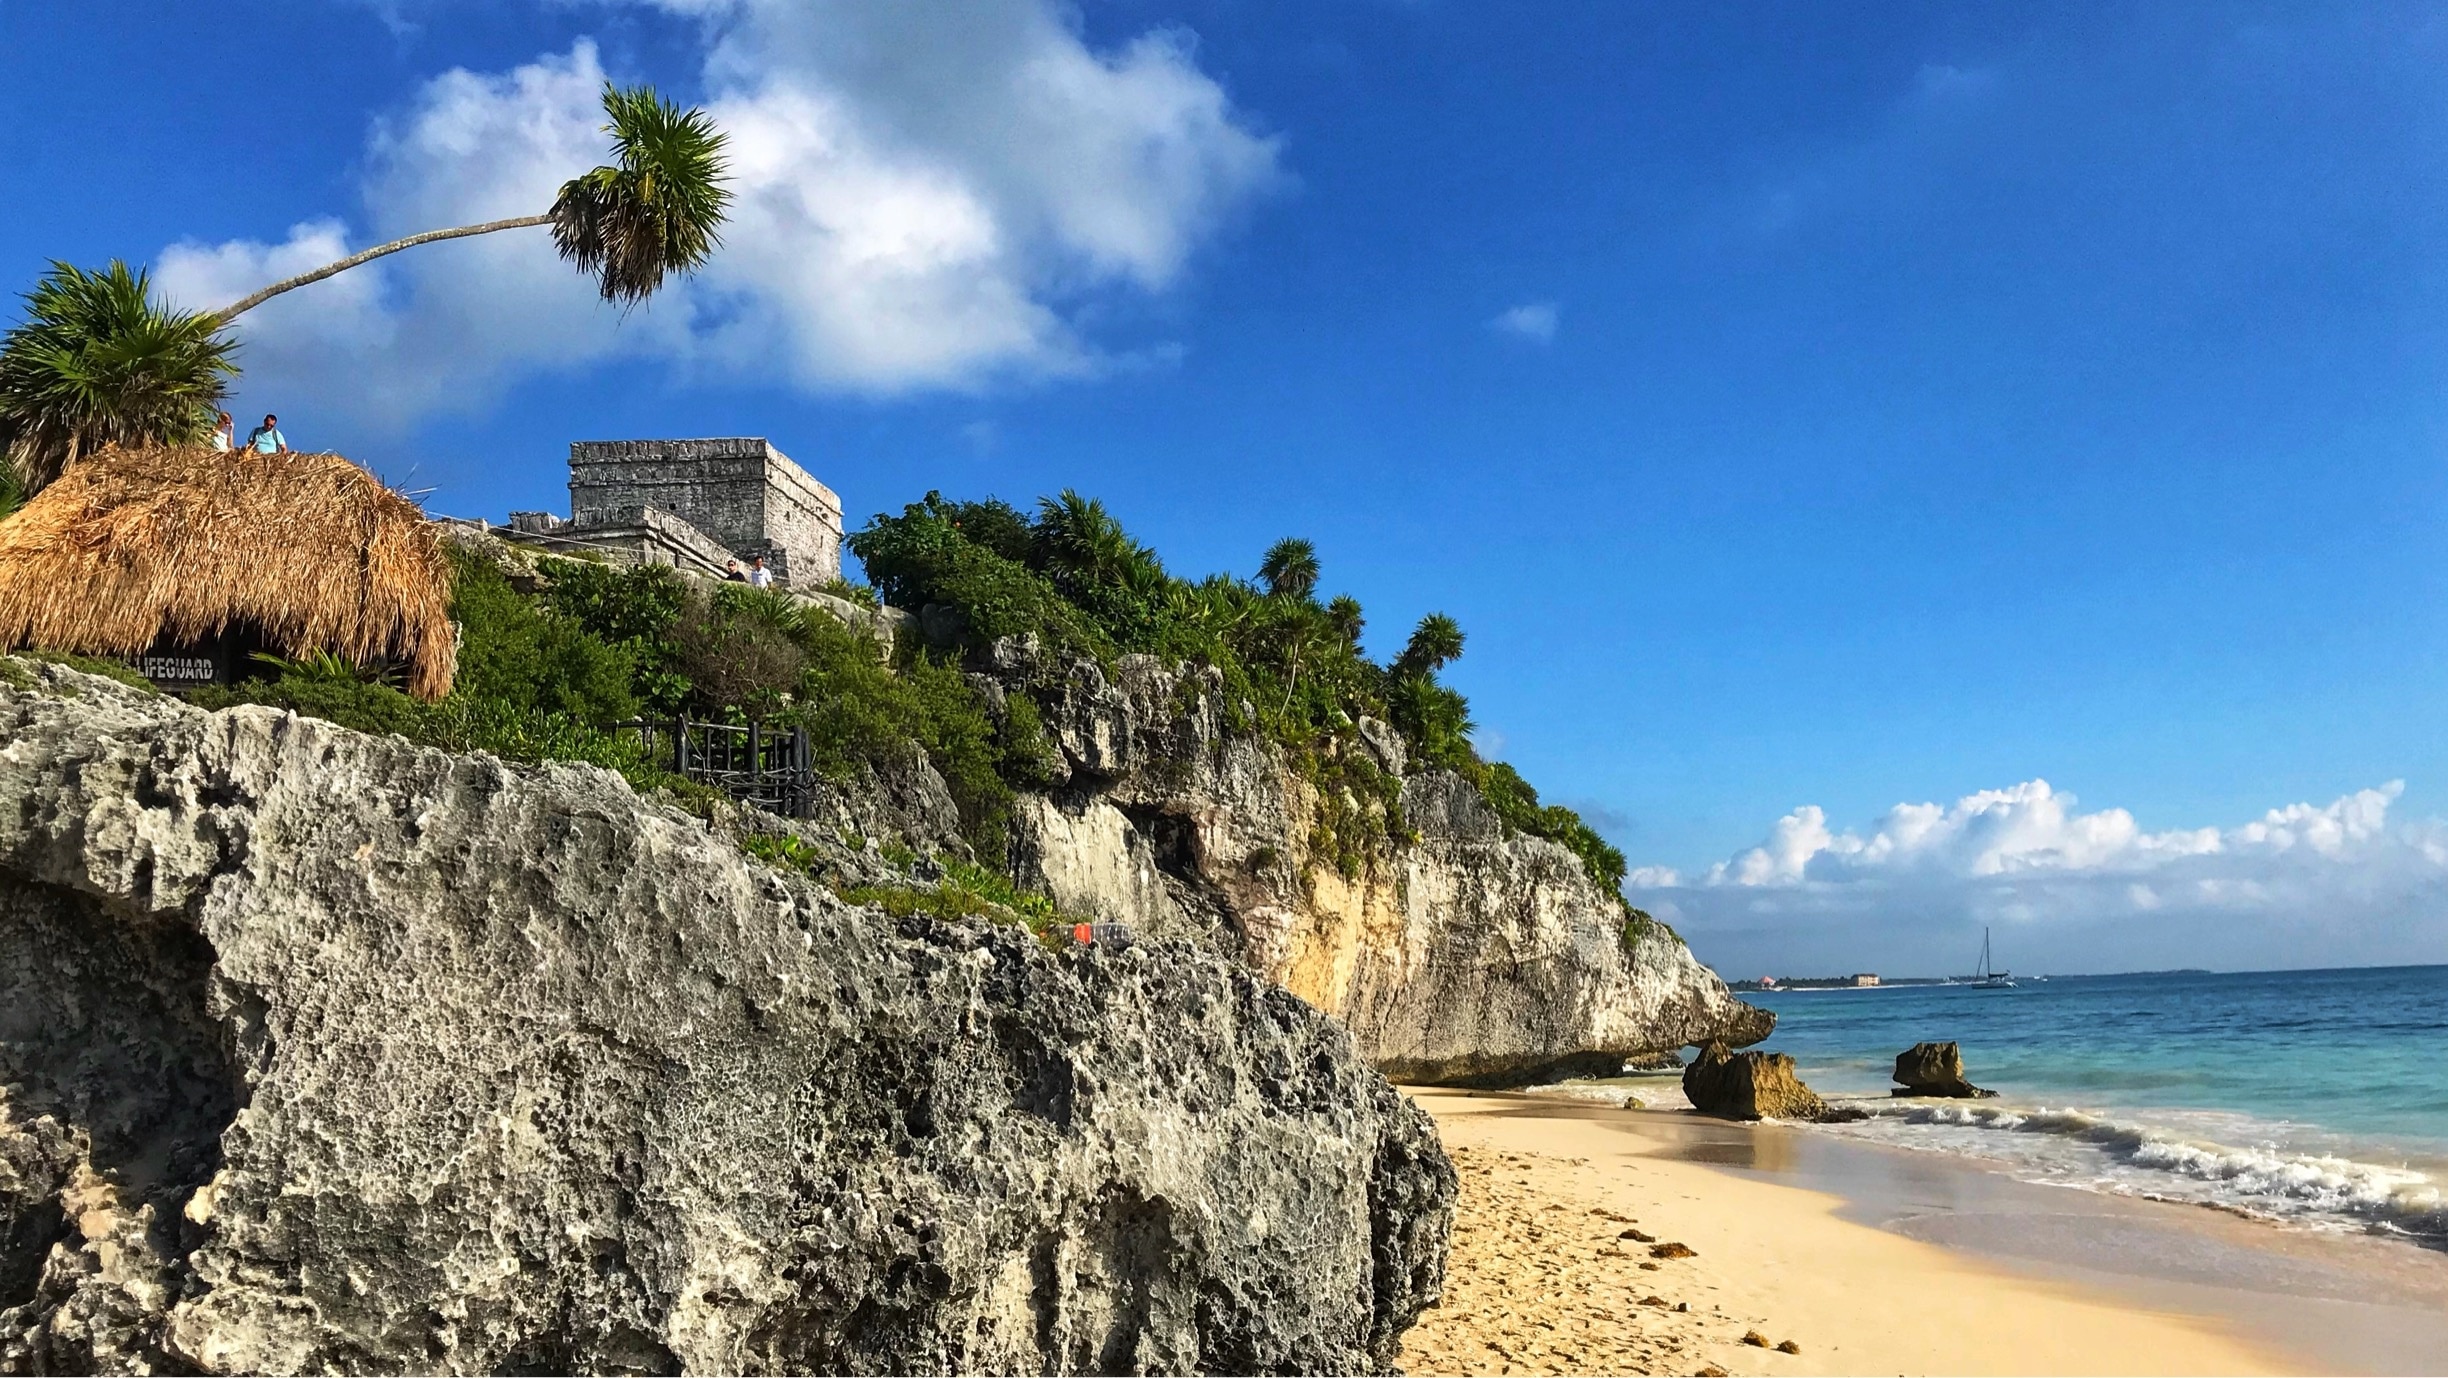 Maya ruin on the beach